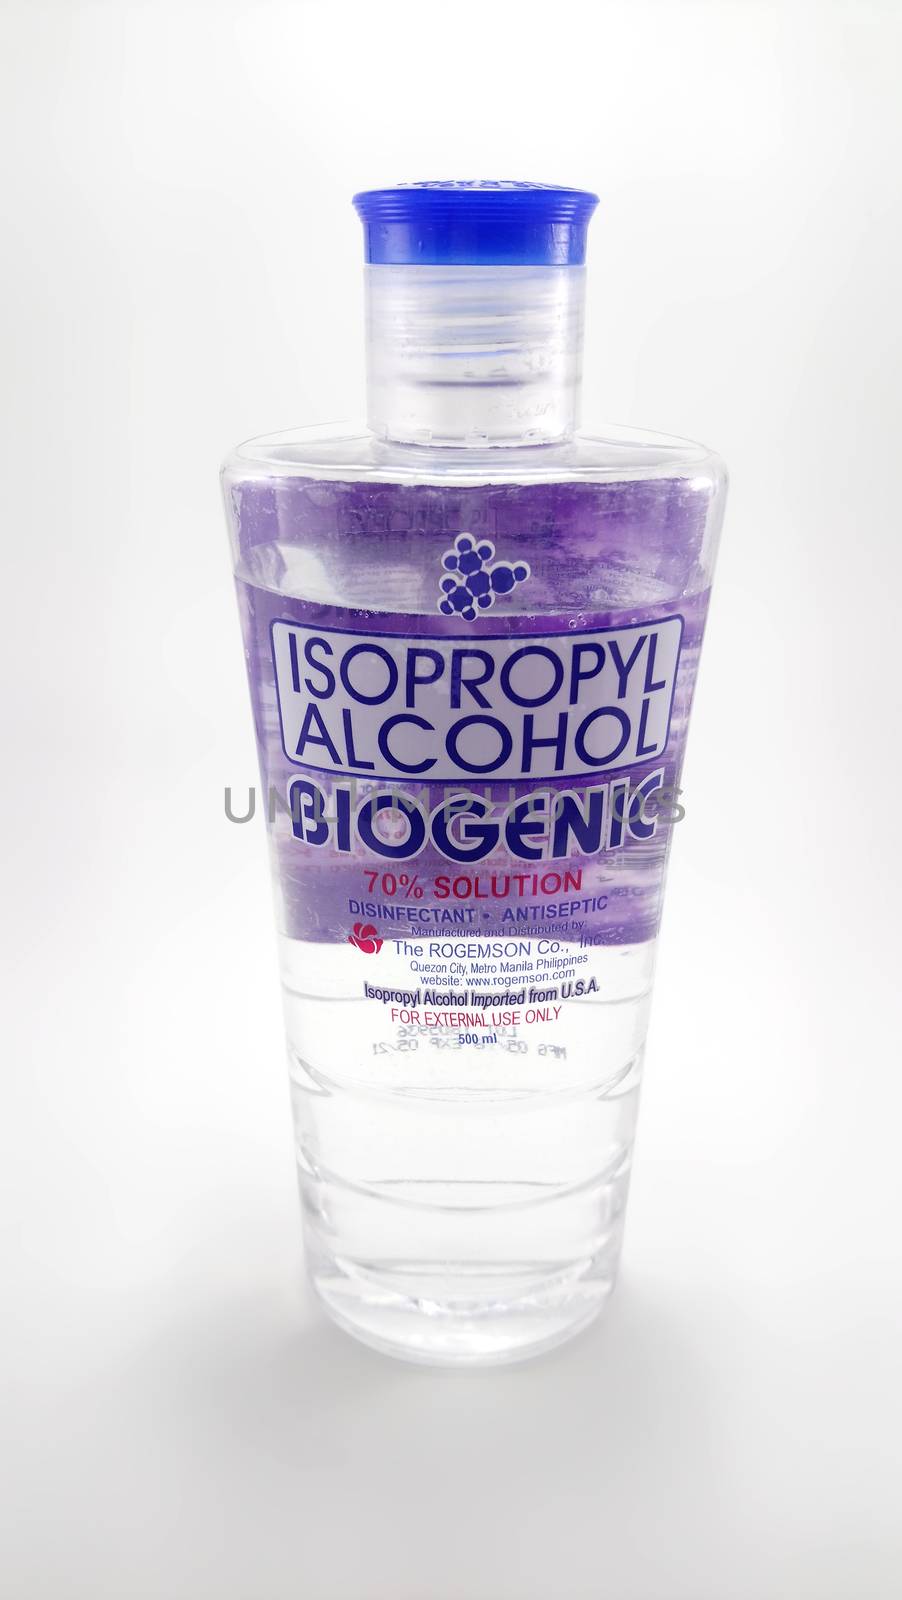 Biogenic isopropyl alcohol in Manila, Philippines by imwaltersy